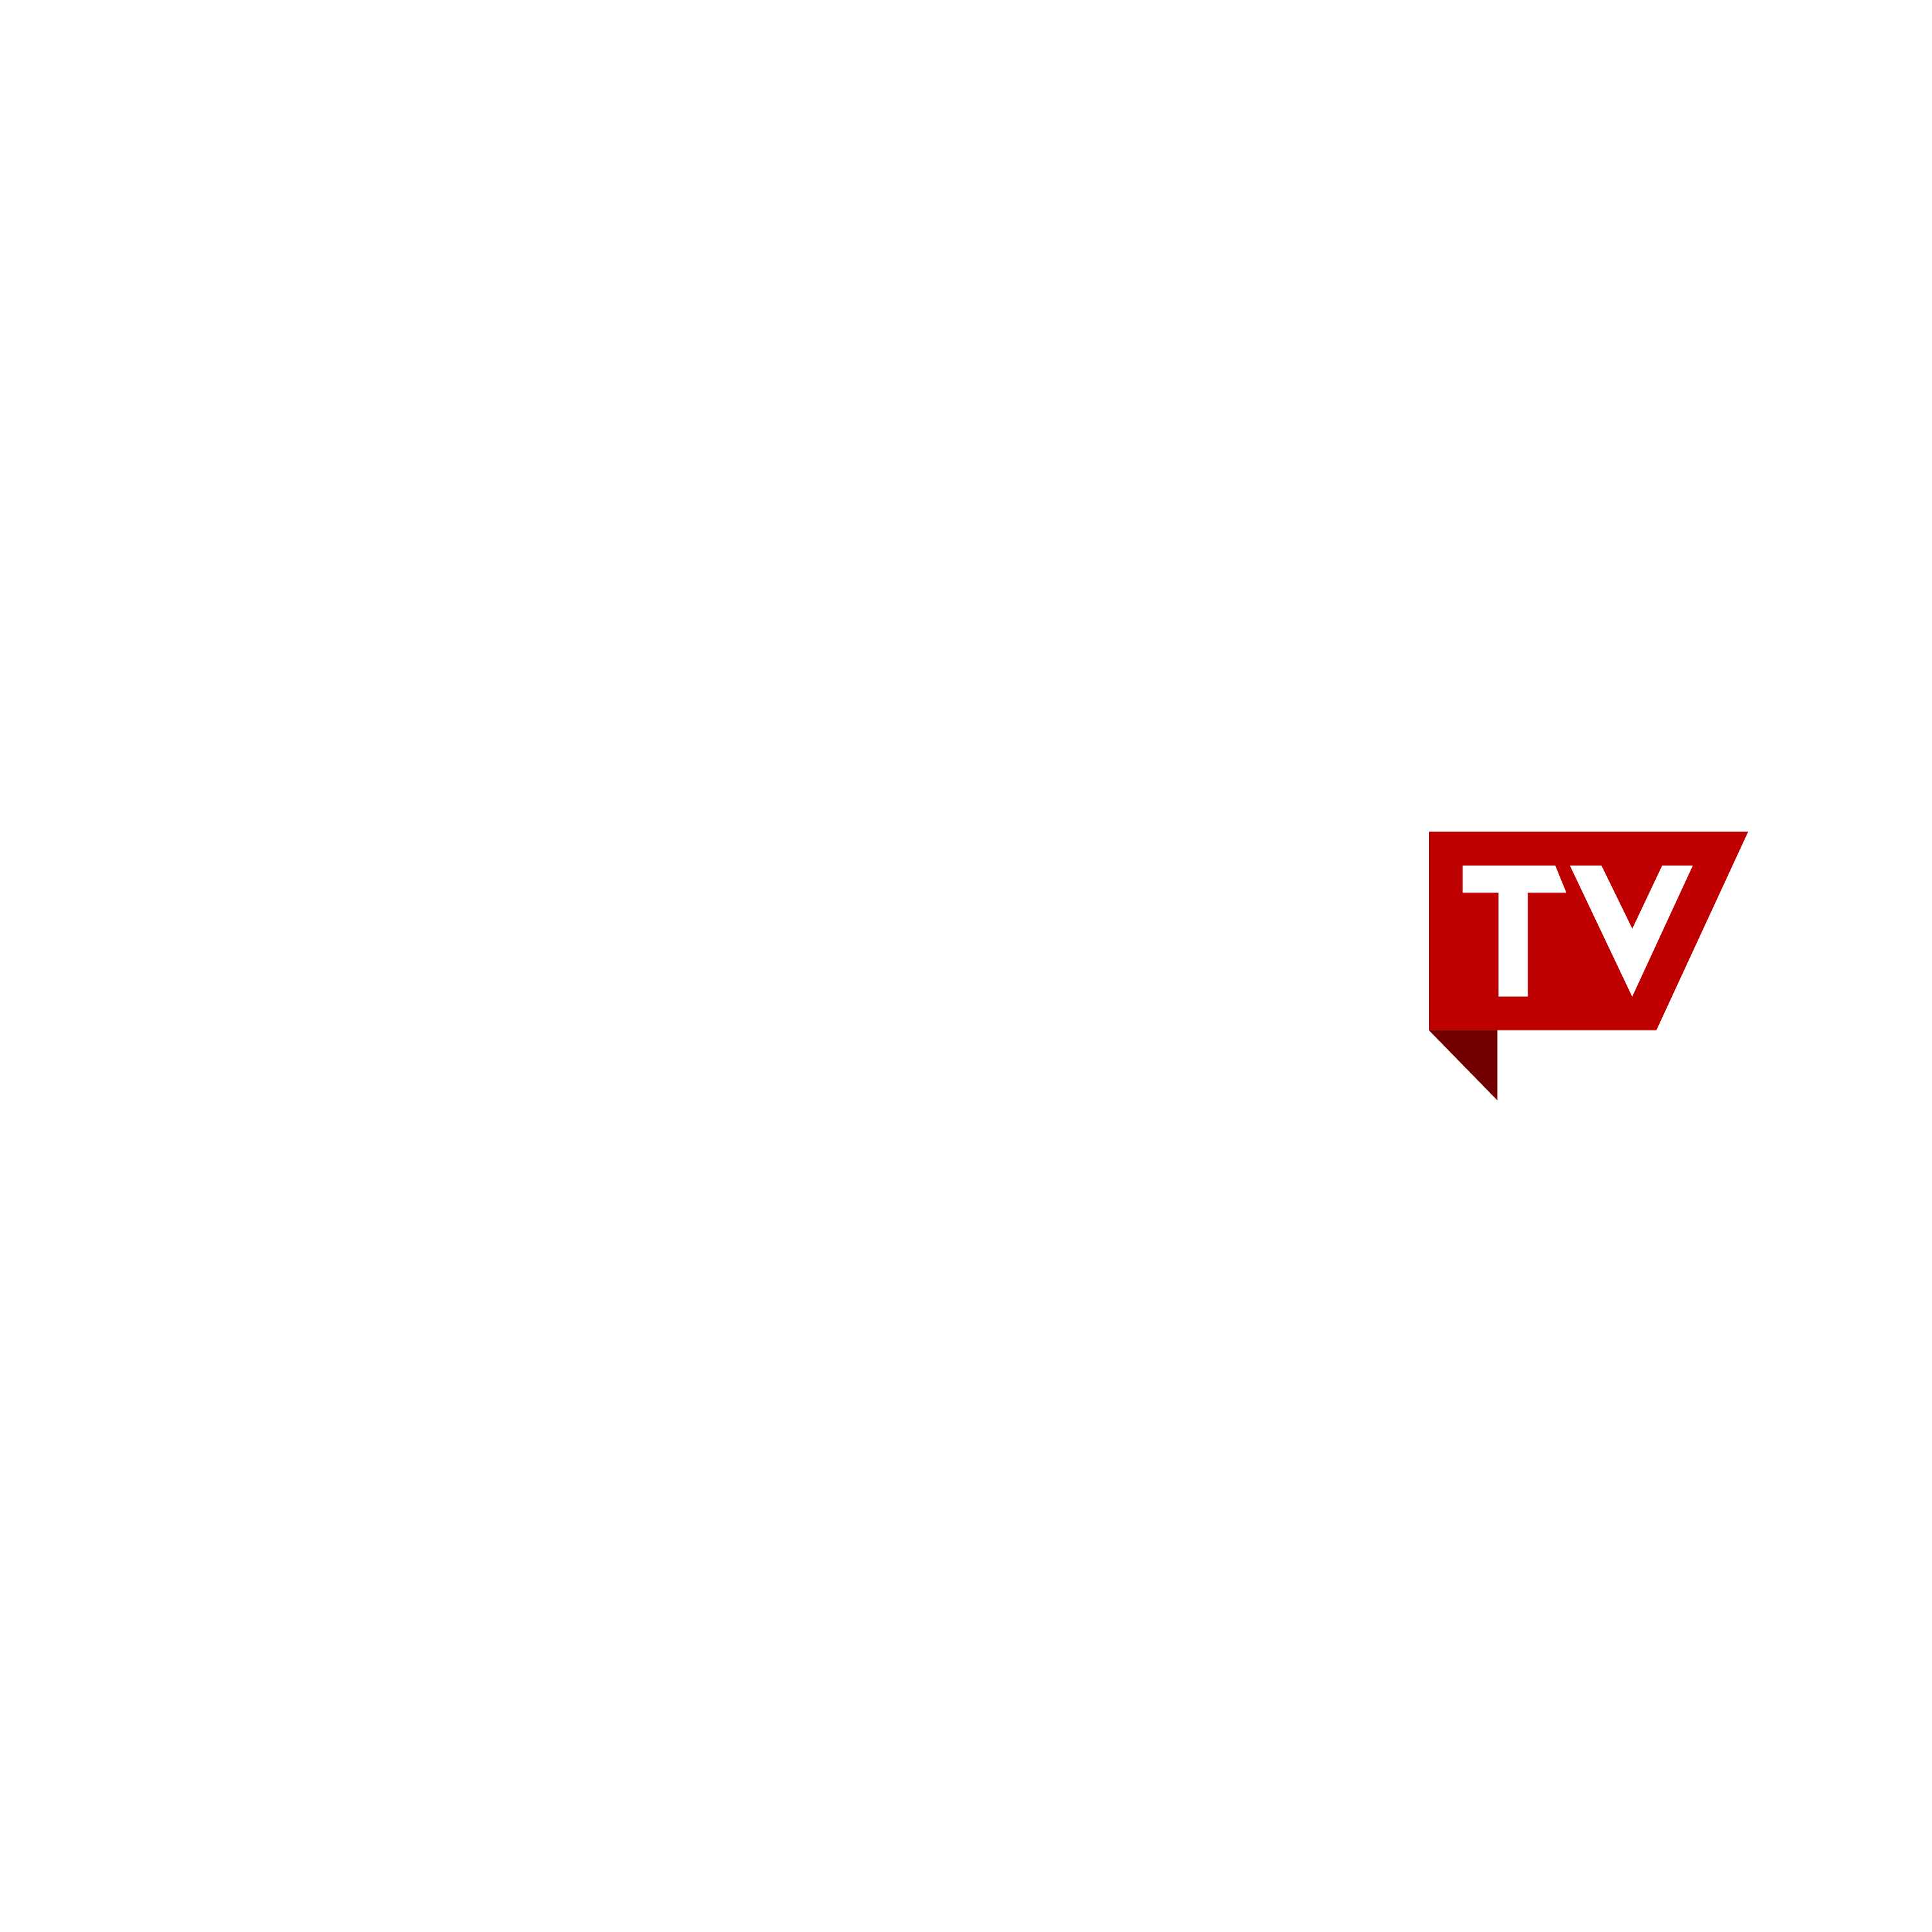 Acorn TV Logo Transparent Image